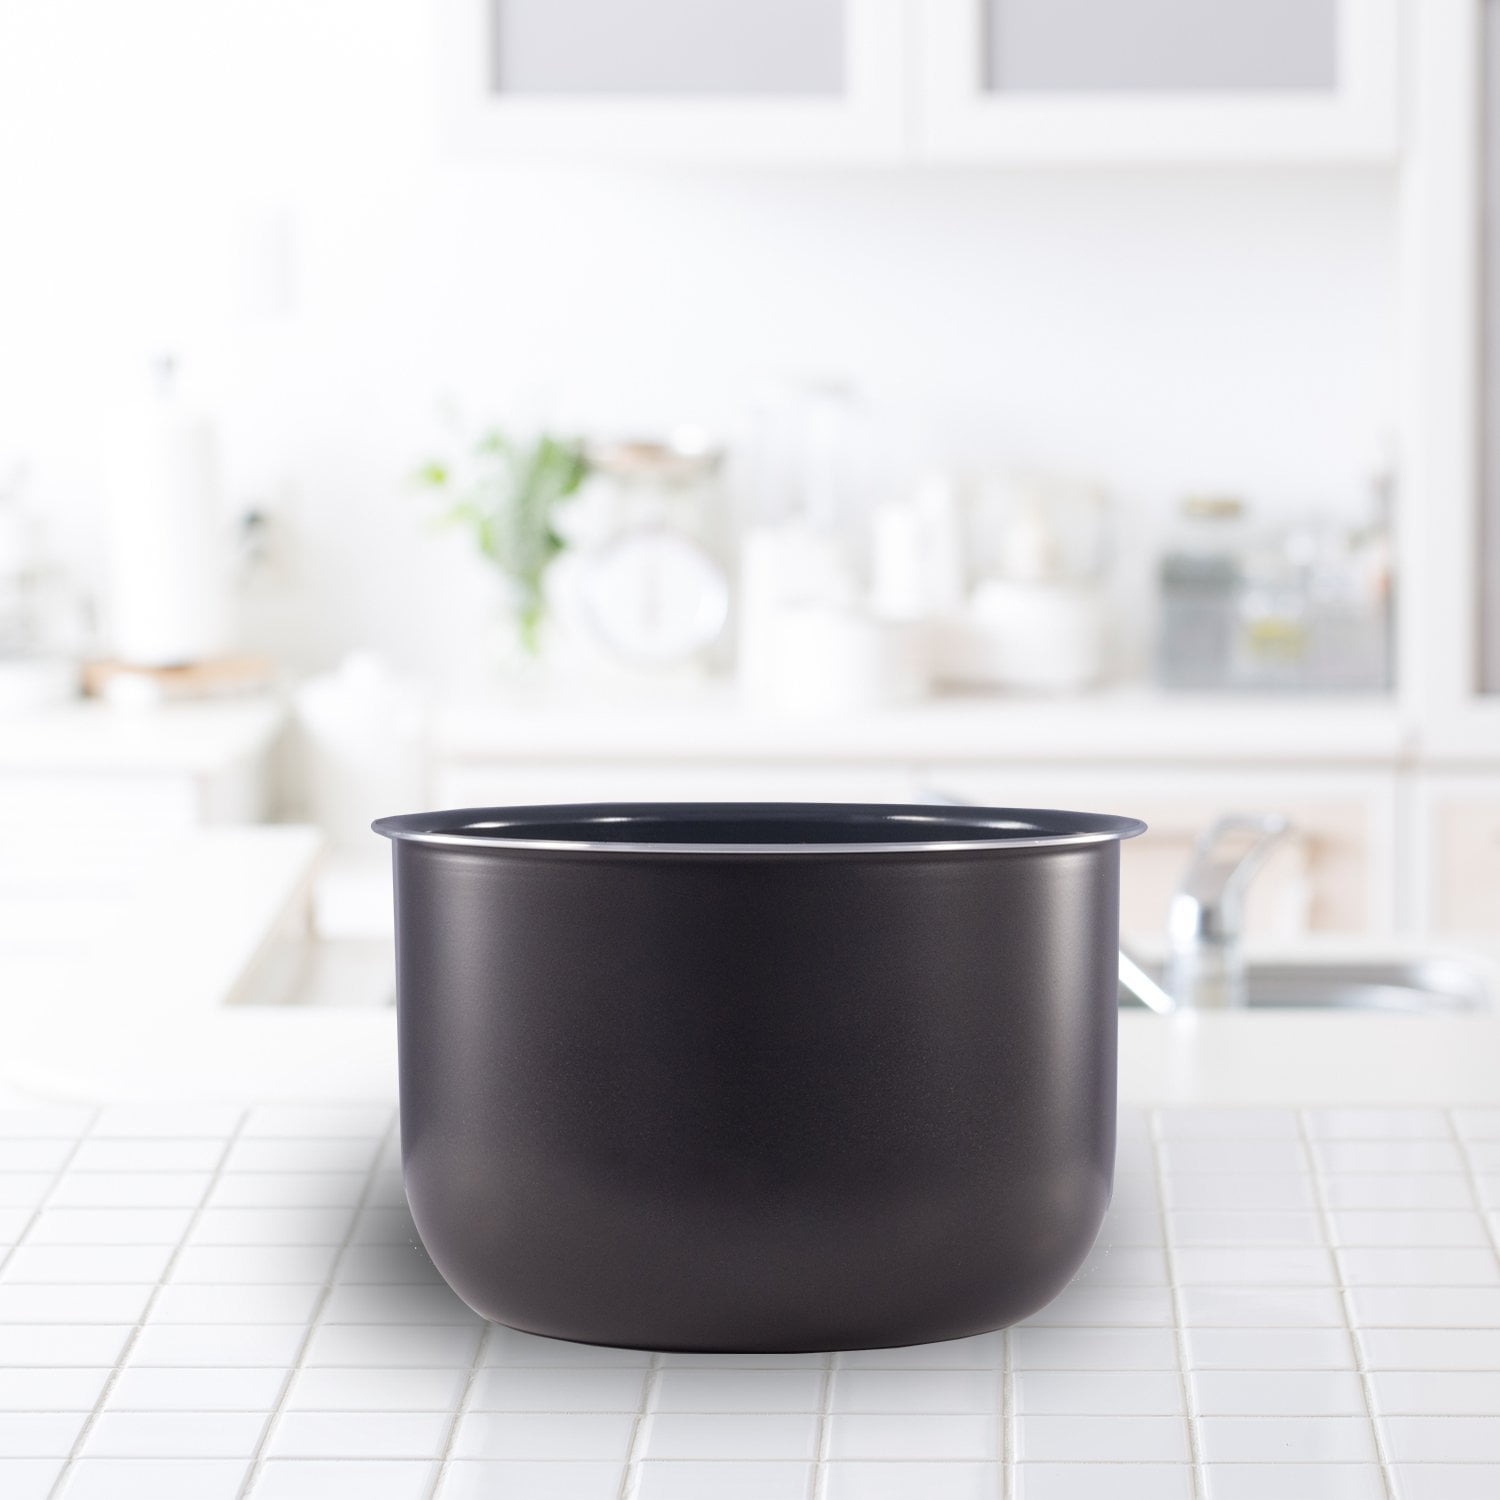  Genuine Instant Pot Ceramic Non-Stick Interior Coated Inner  Cooking Pot - 6 Quart: Home & Kitchen